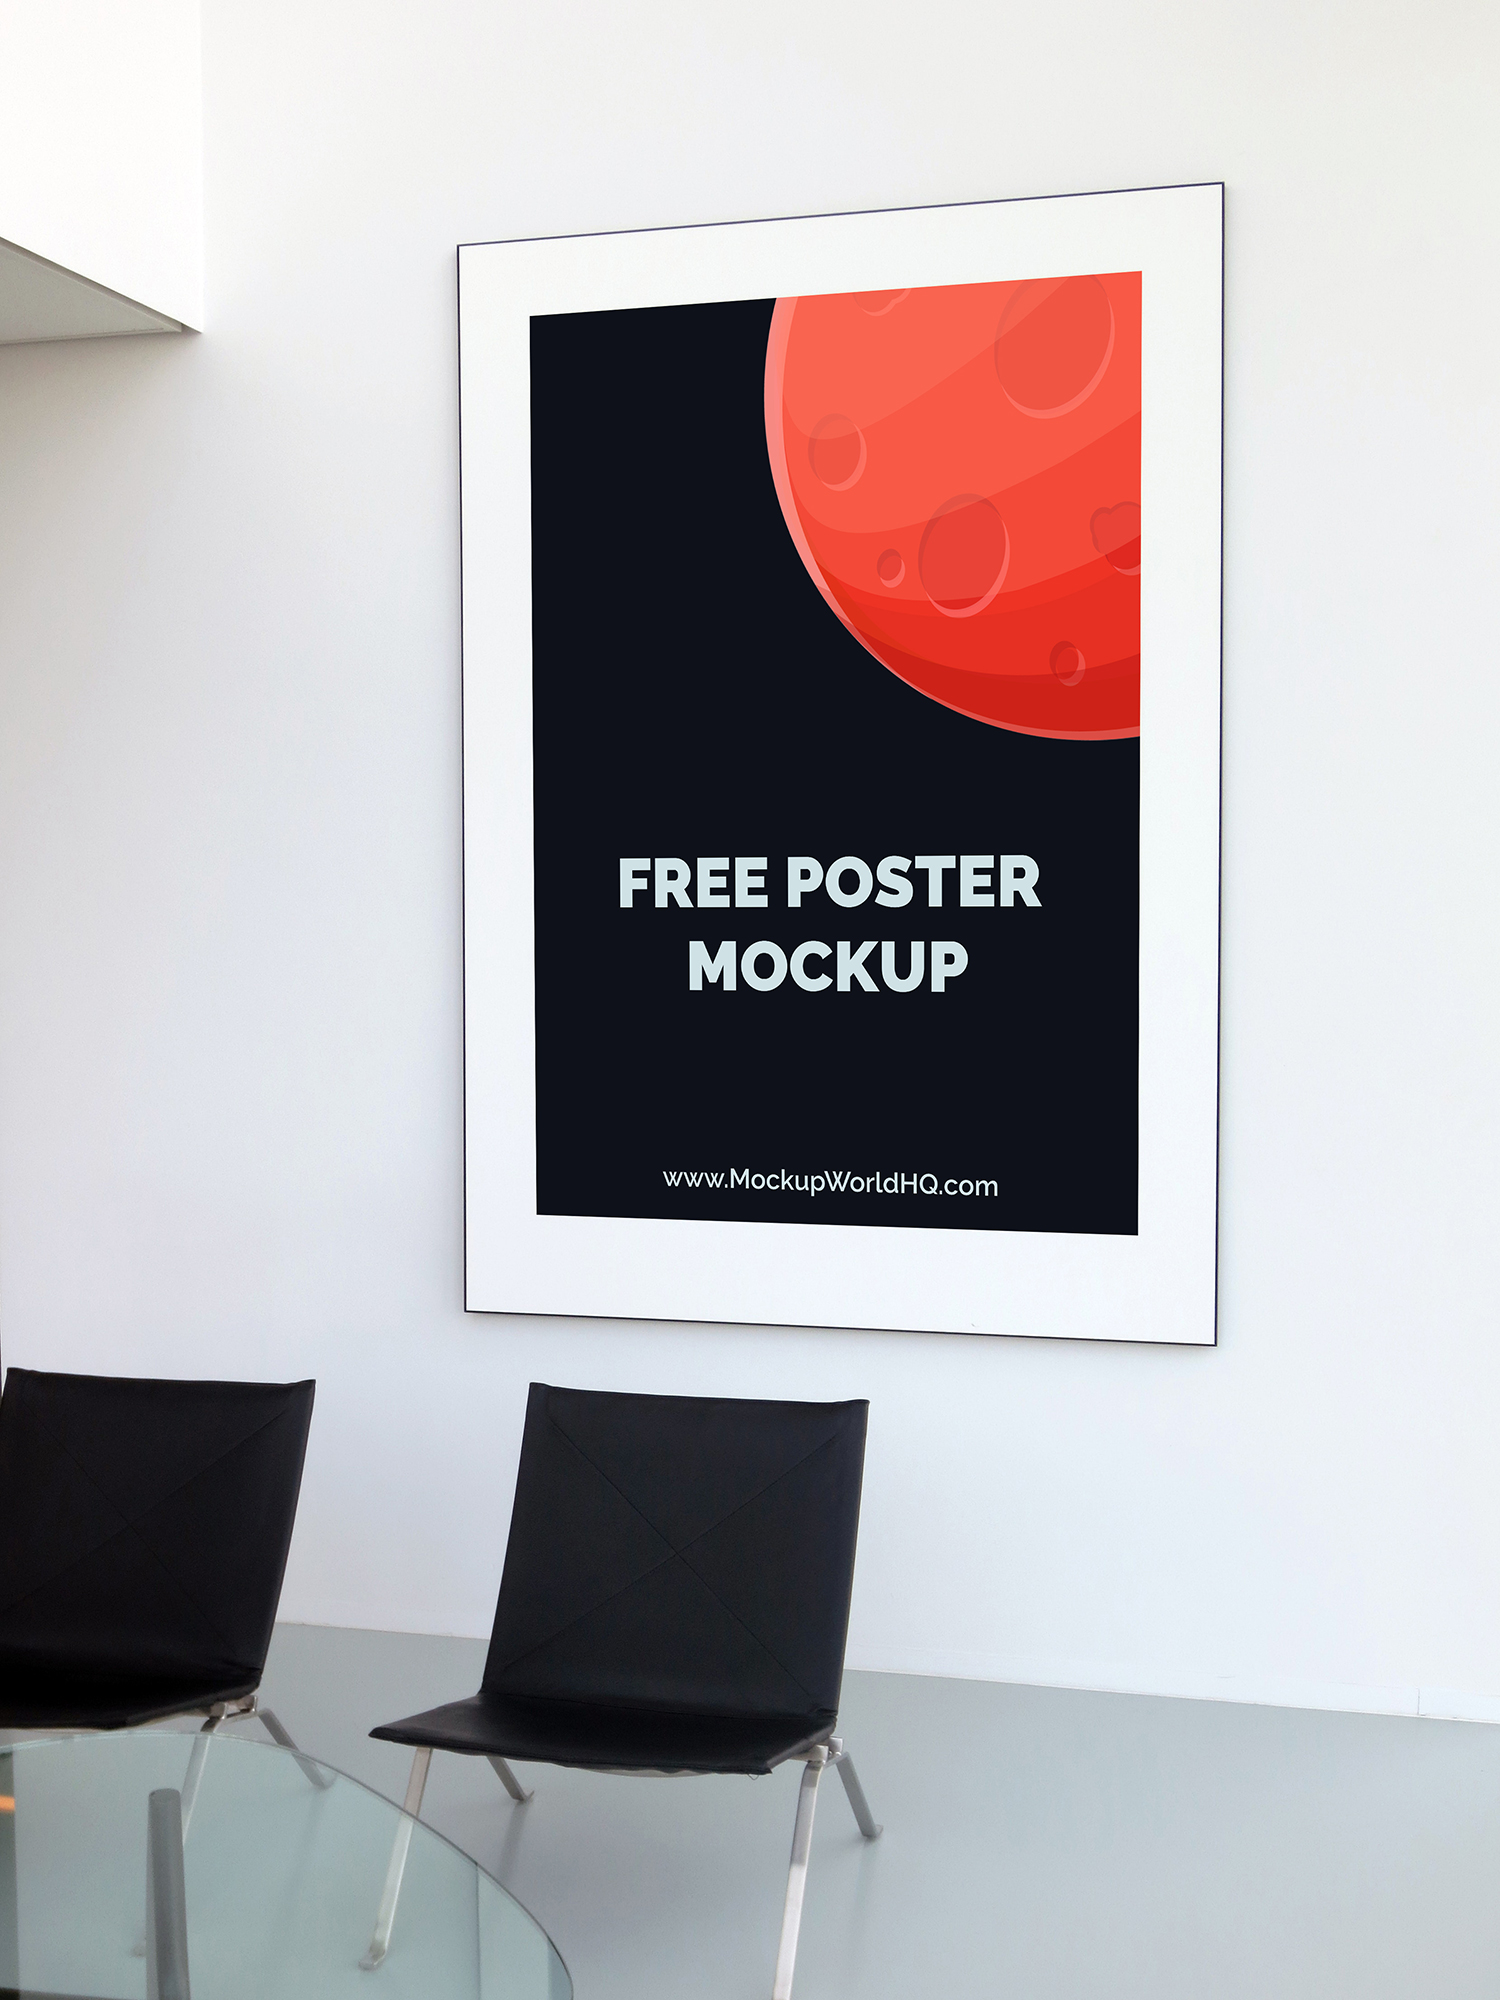 Free Indoor Poster Mockup | Mockup World HQ